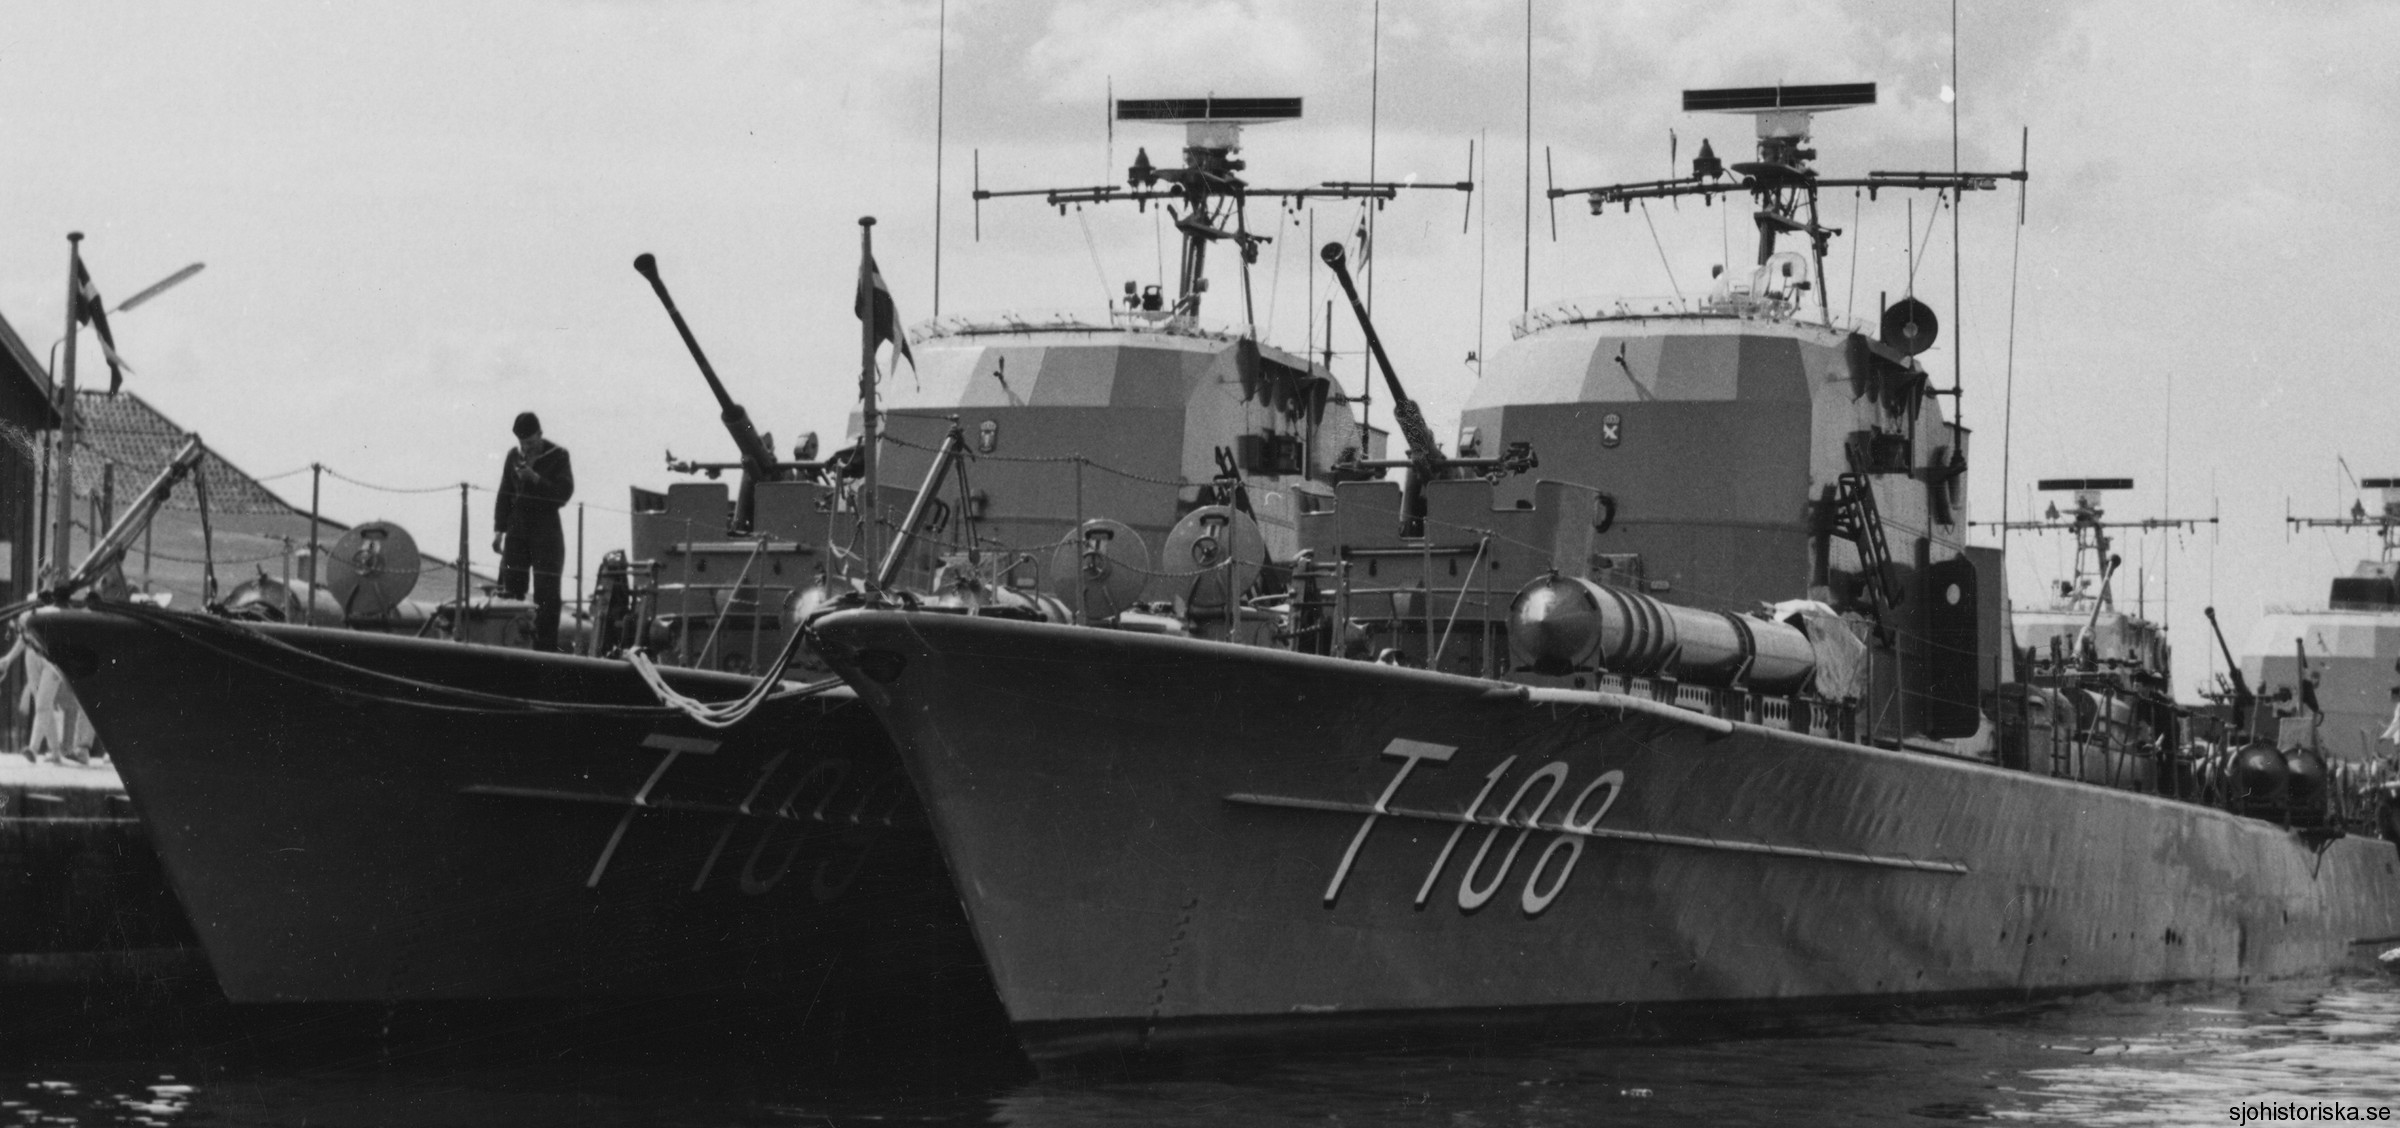 t108 altair hms hswms plejad class fast attack craft torpedo boat vessel swedish navy svenska marinen 02